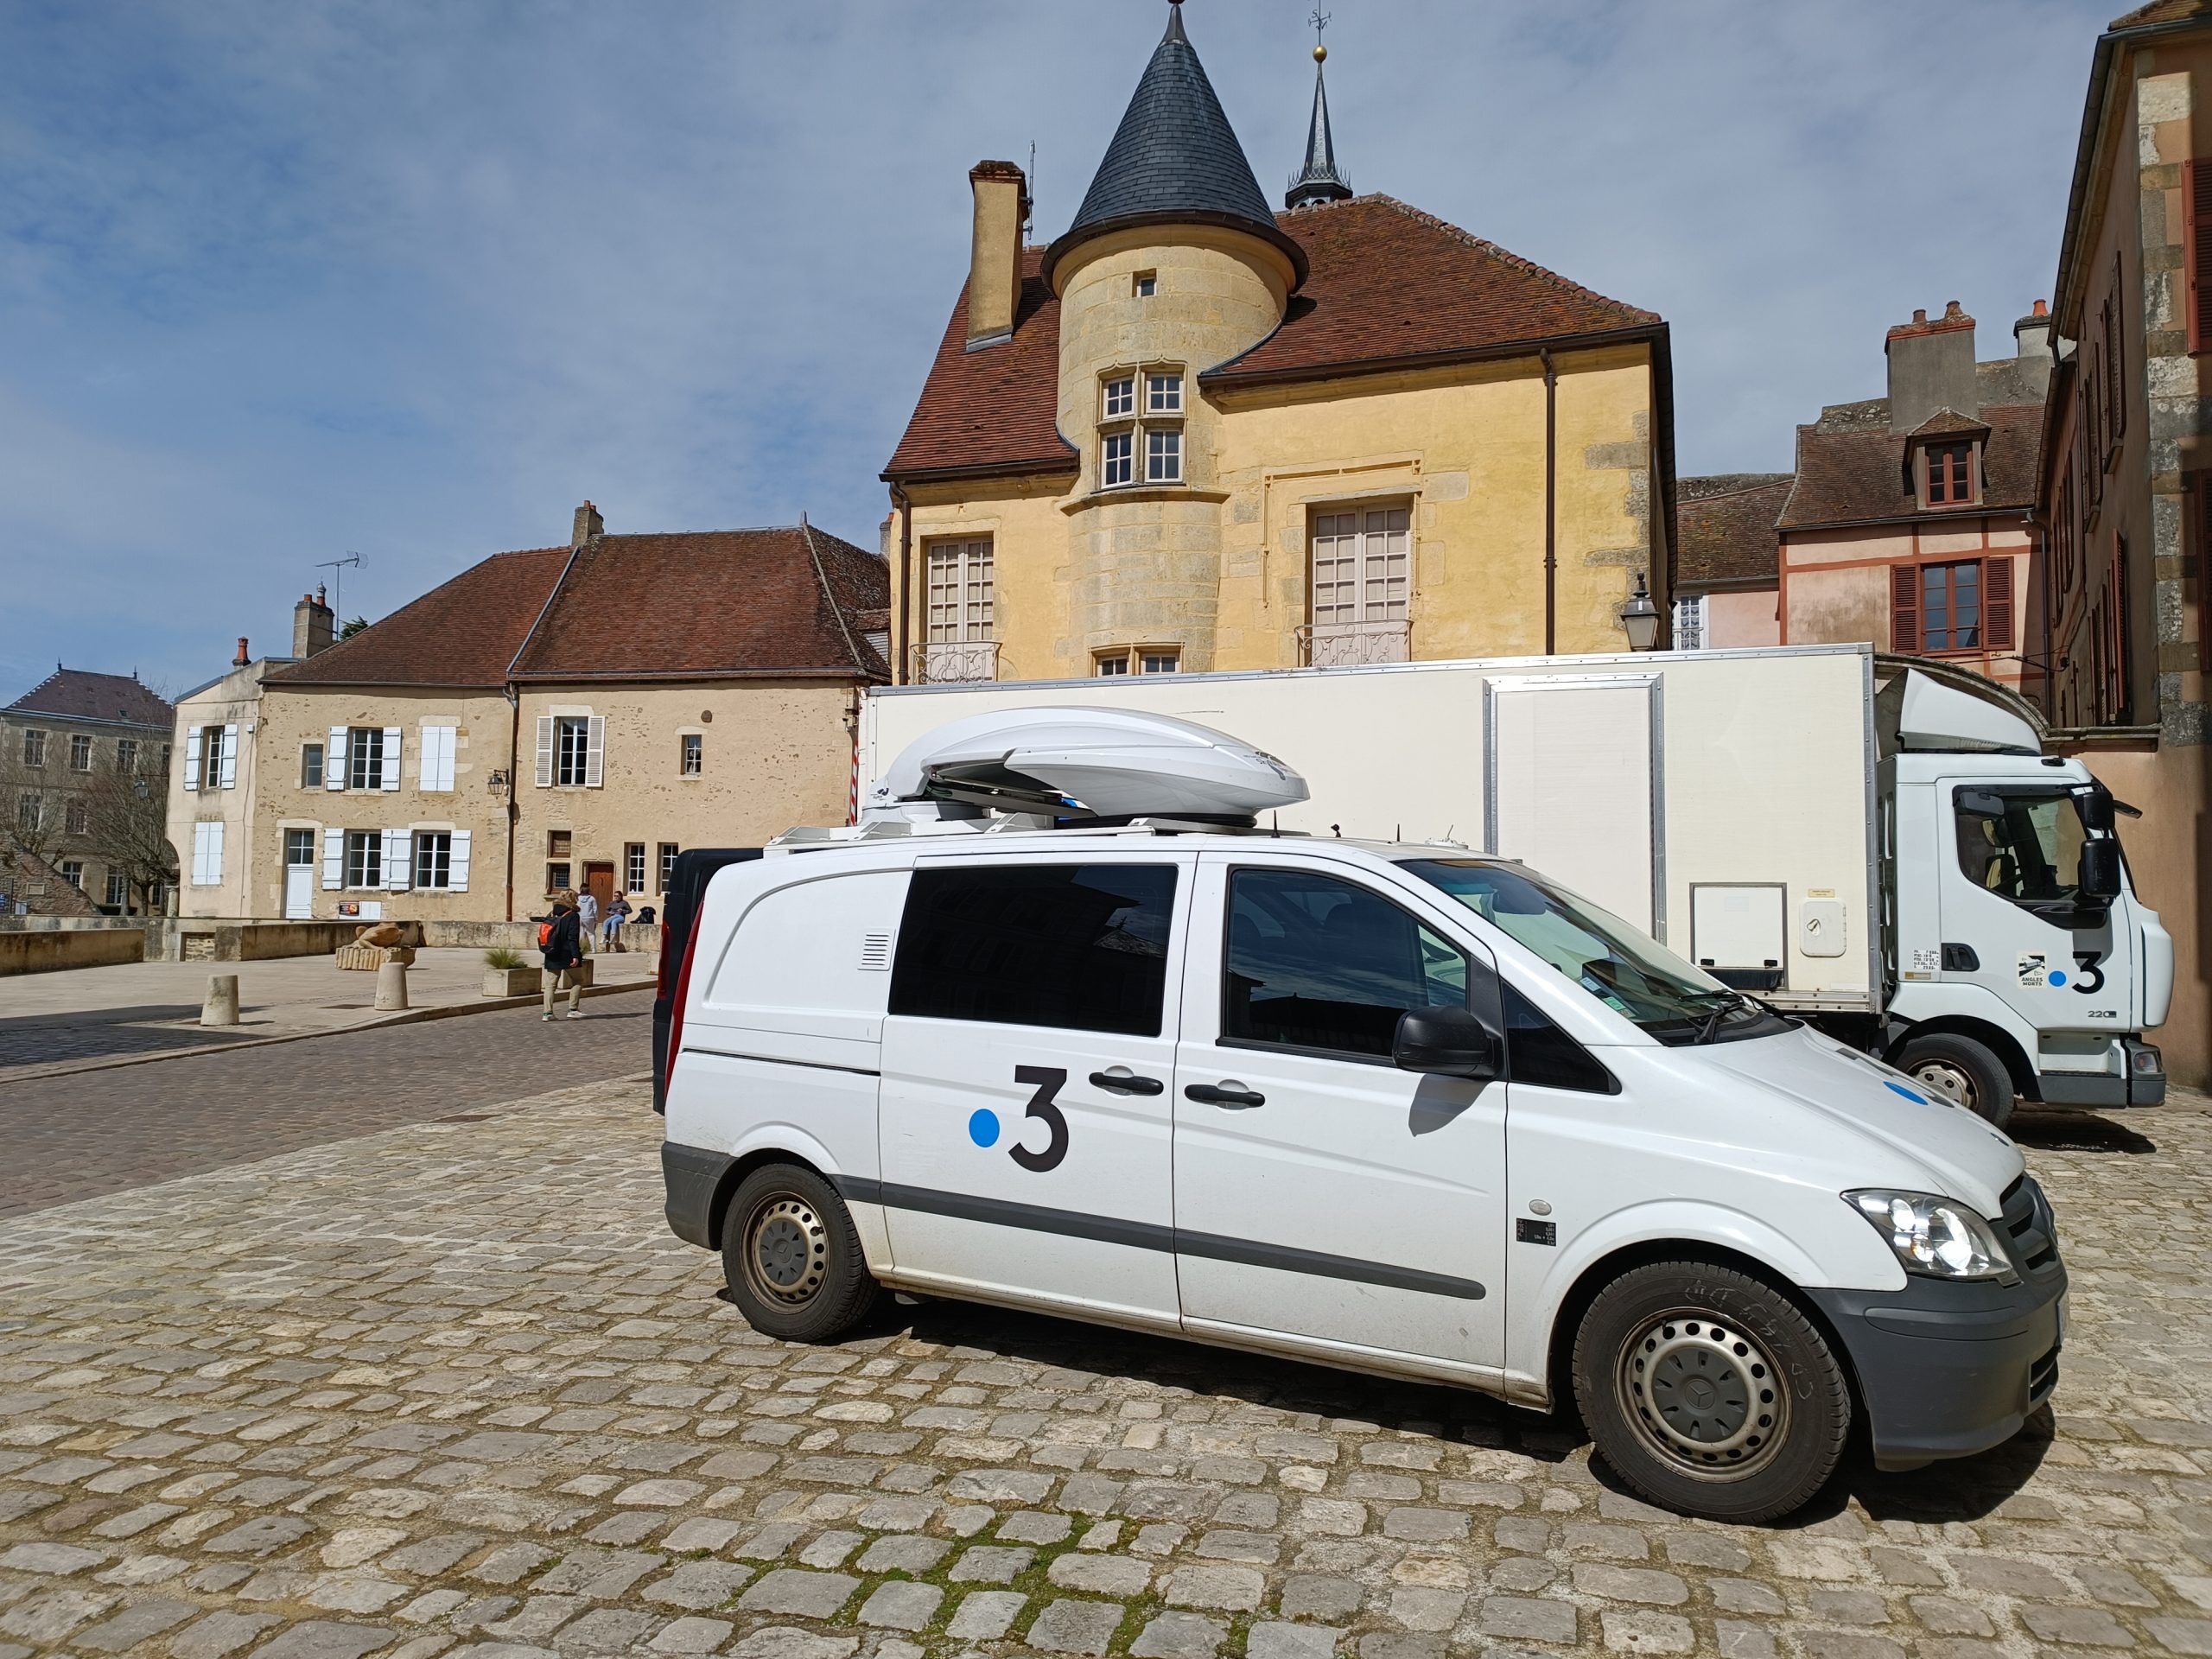 France 3 Bourgogne en tournage à Avallon